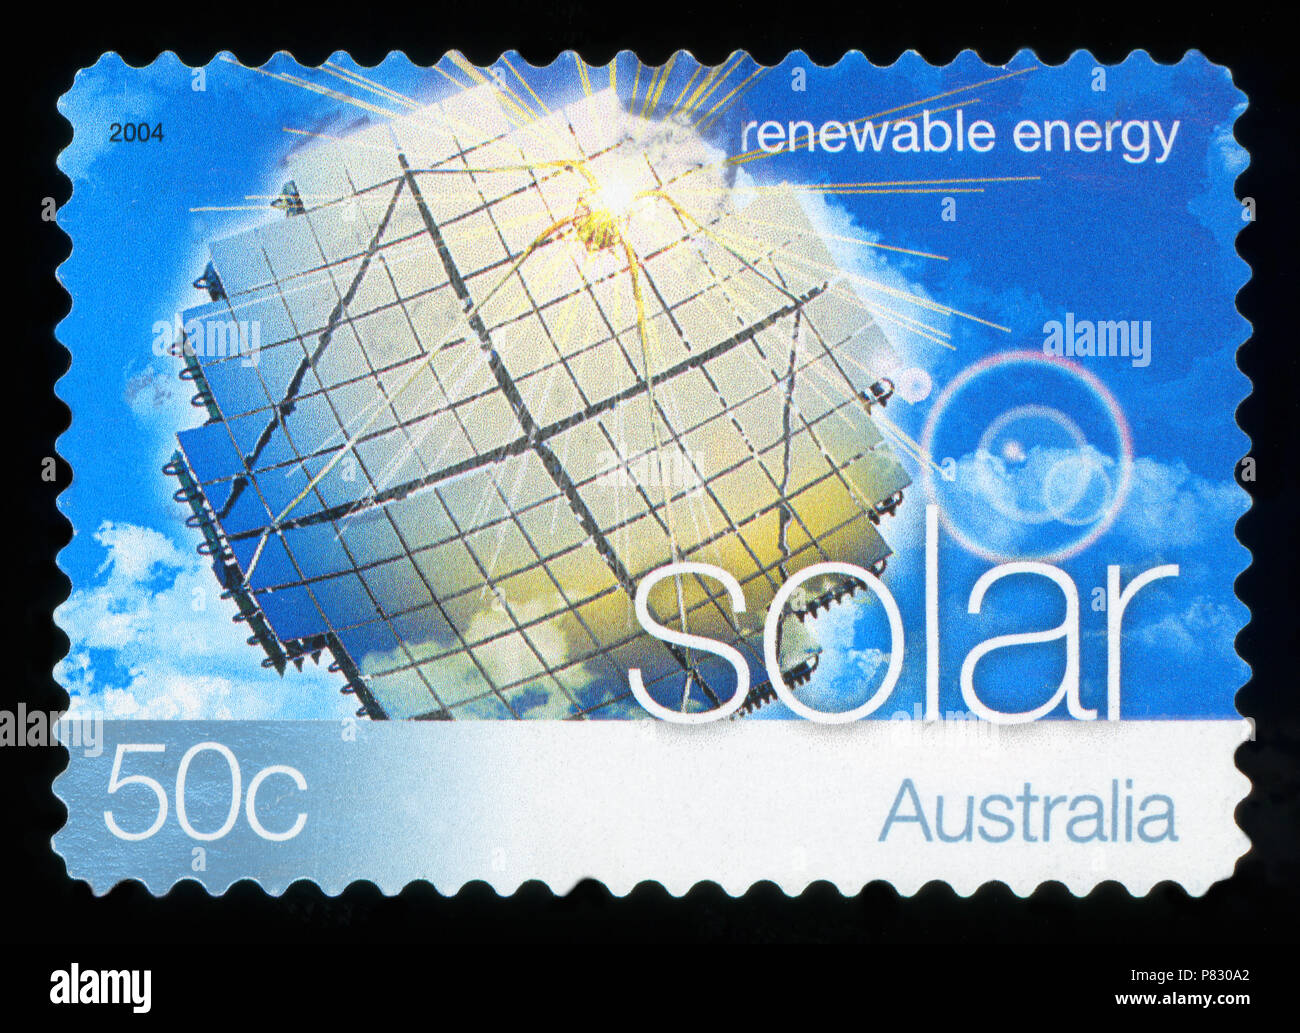 Australia postage - Stamp printed in Australia shows the renewable energy Stock Photo